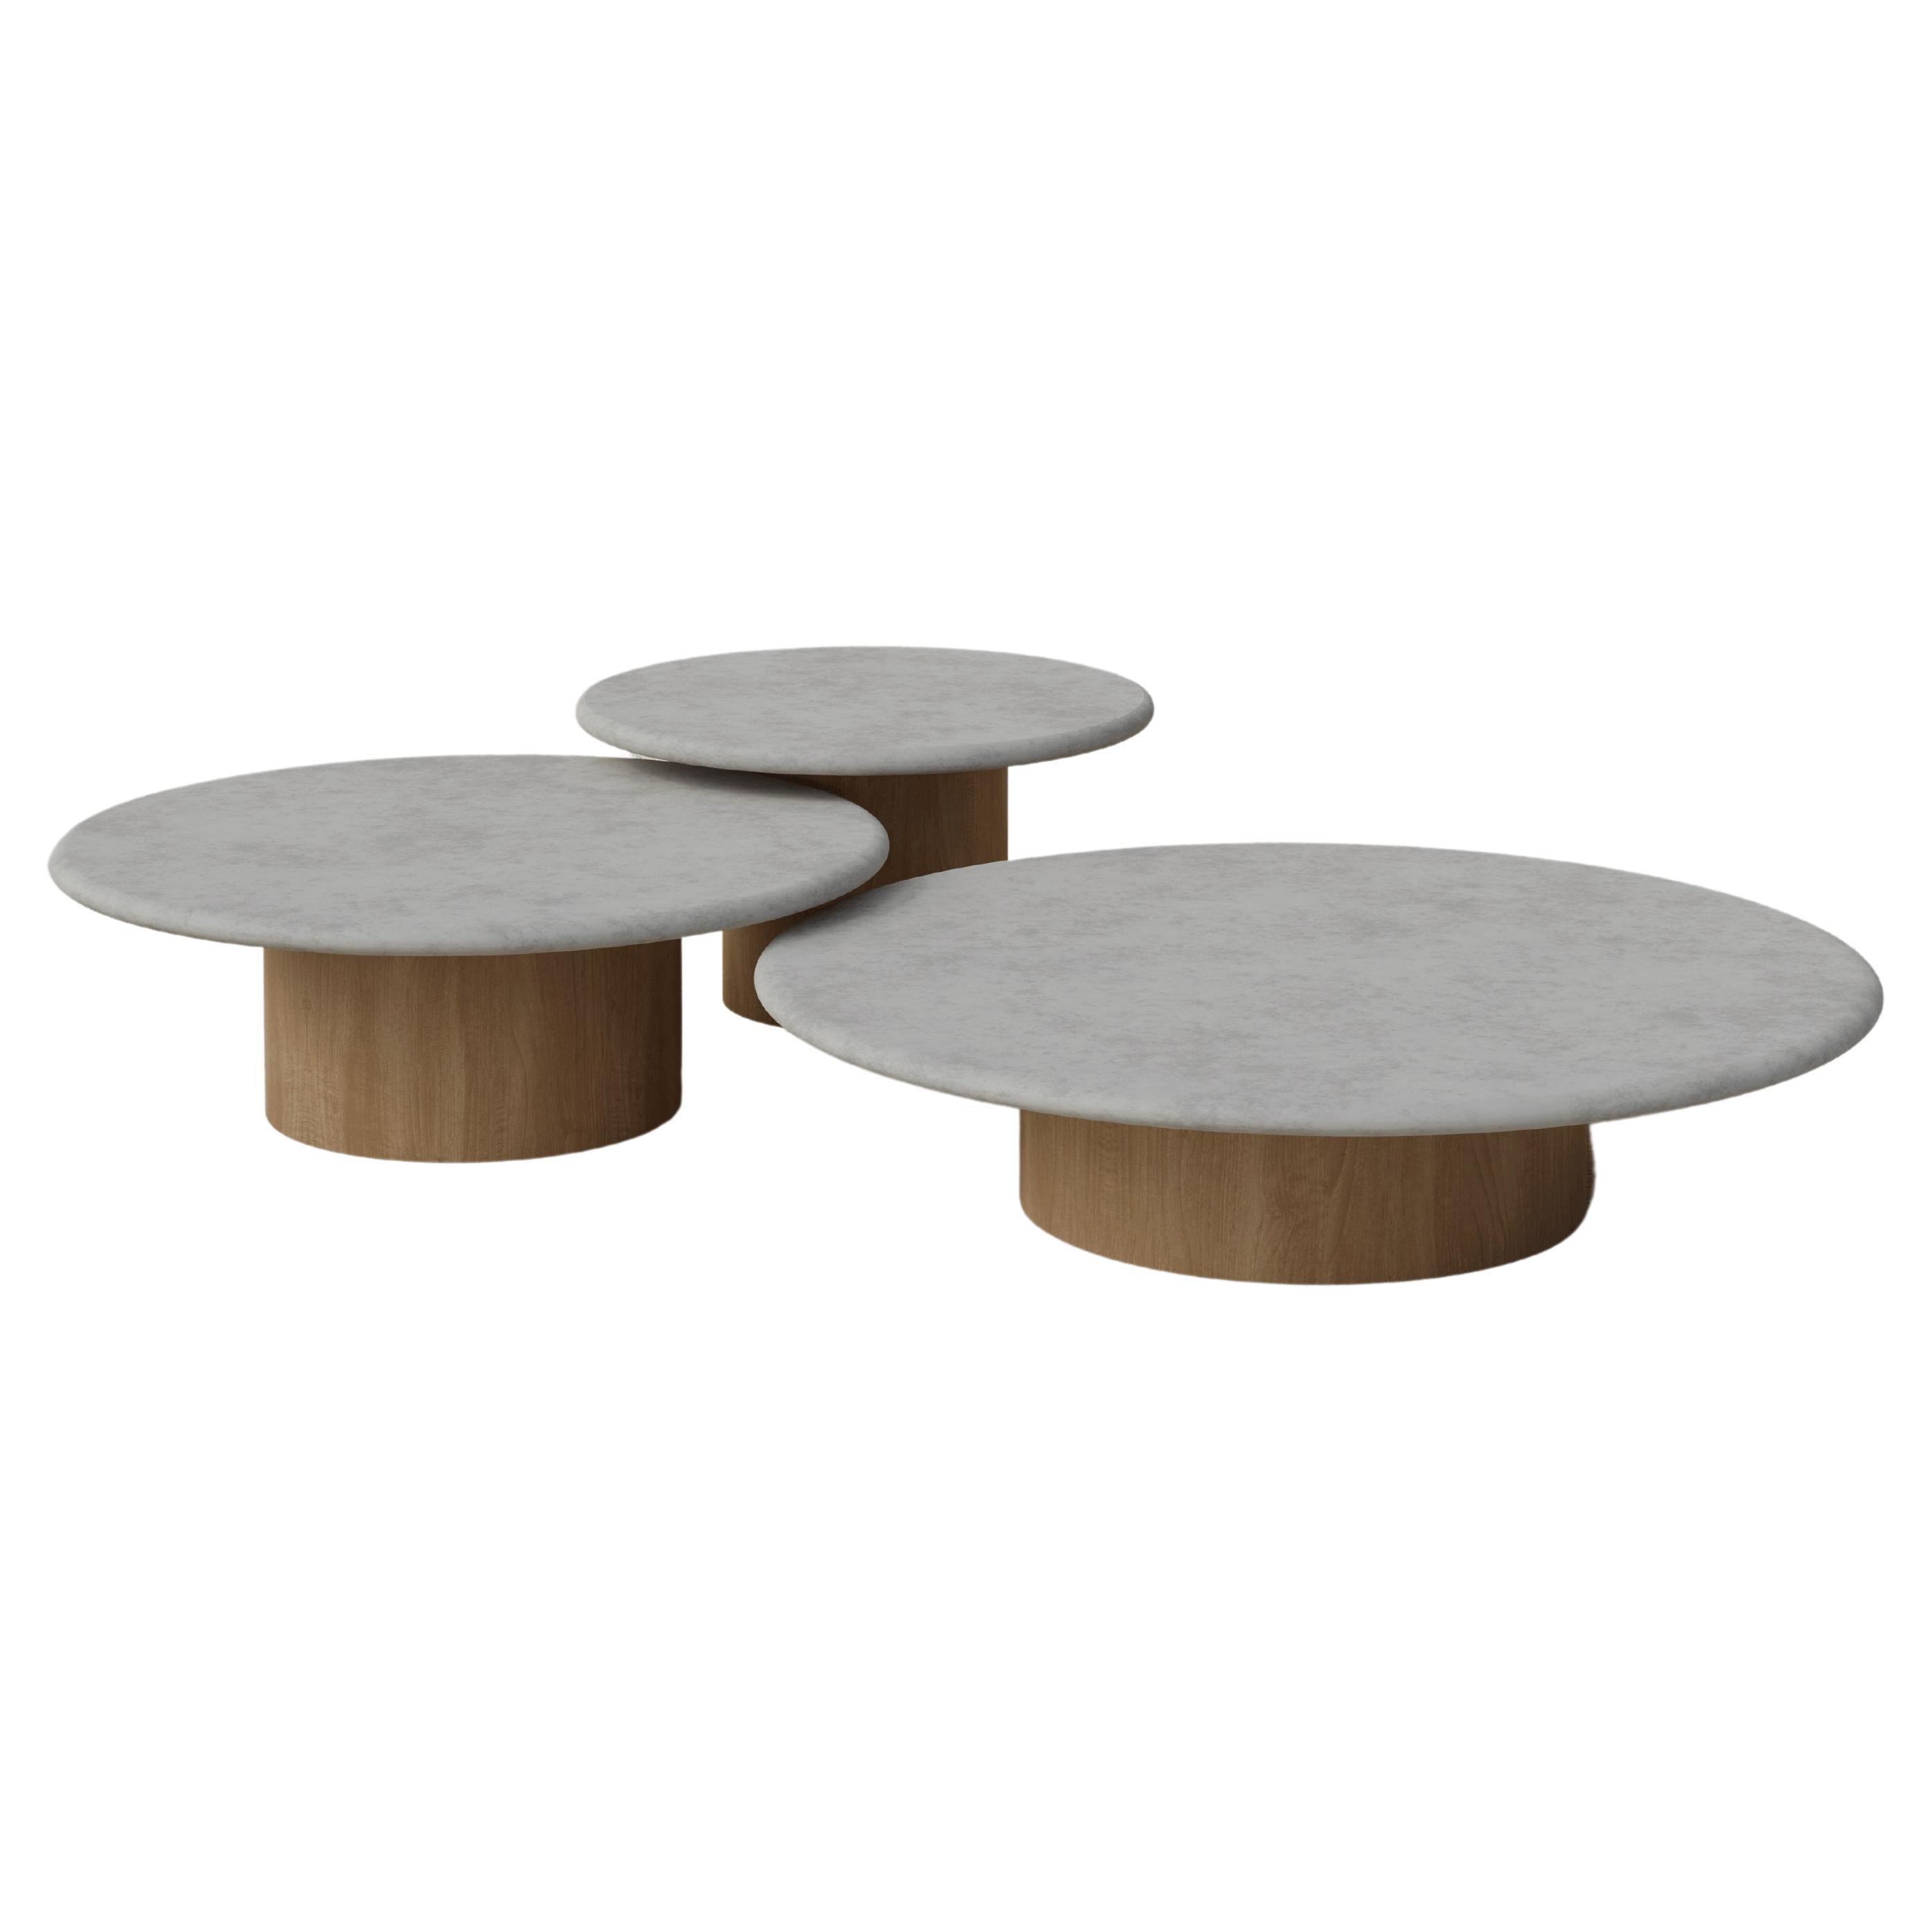 Raindrop Coffee Table Set, 600, 800, 1000, Microcrete / Oak For Sale